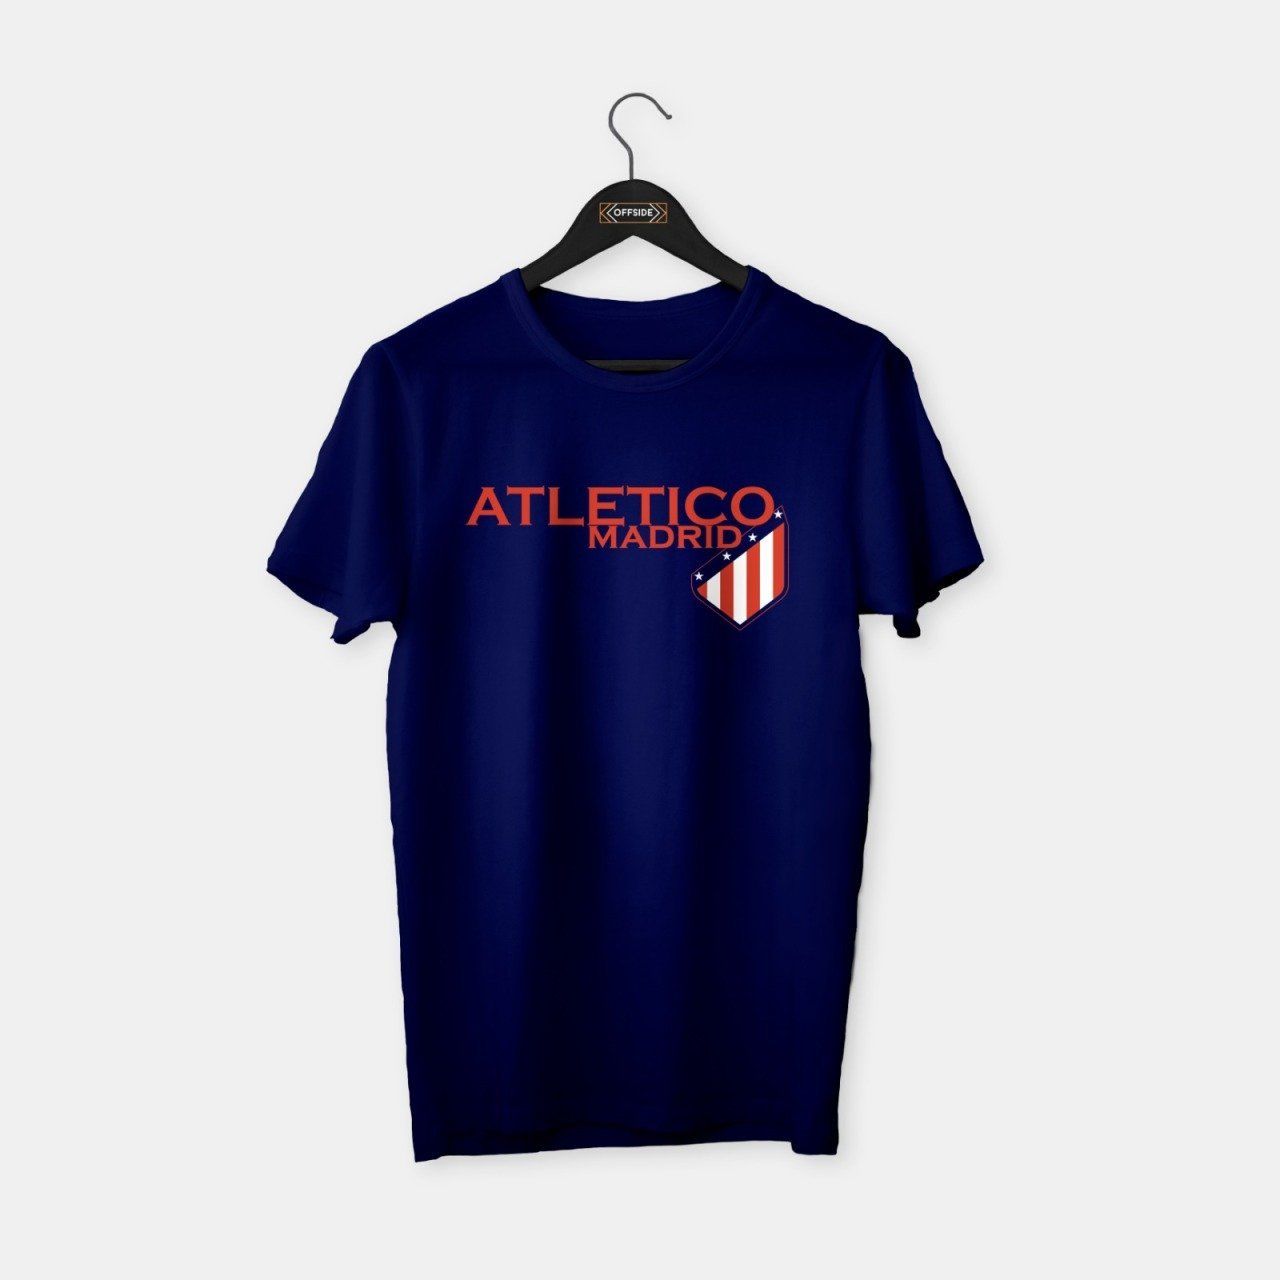 Atletico Madrid T-shirt